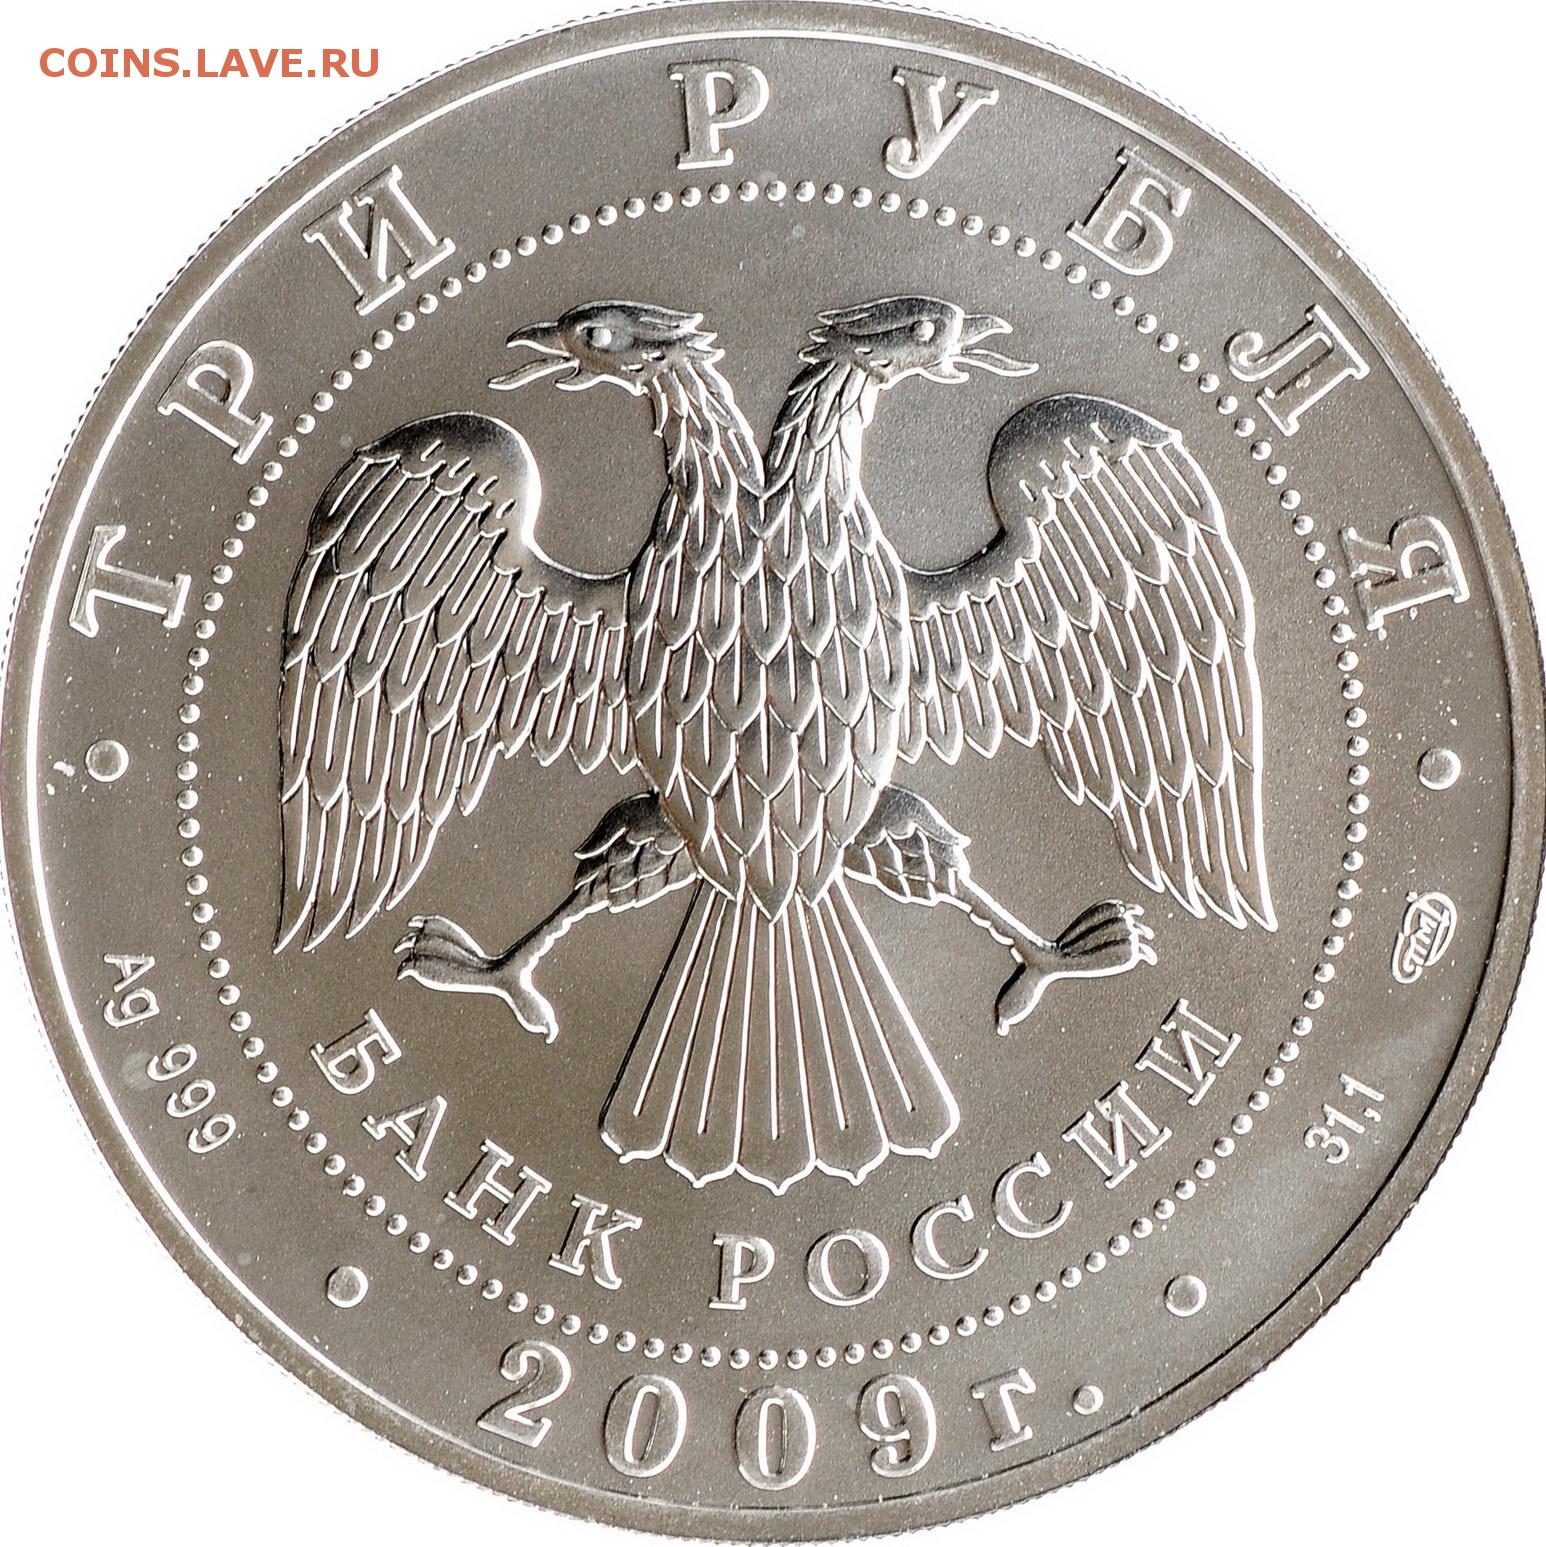 3 рубля урал. Монета 3 рубля 2023. Победоносец монета серебро 3 рубля. Победоносец 3 рубля 2009.